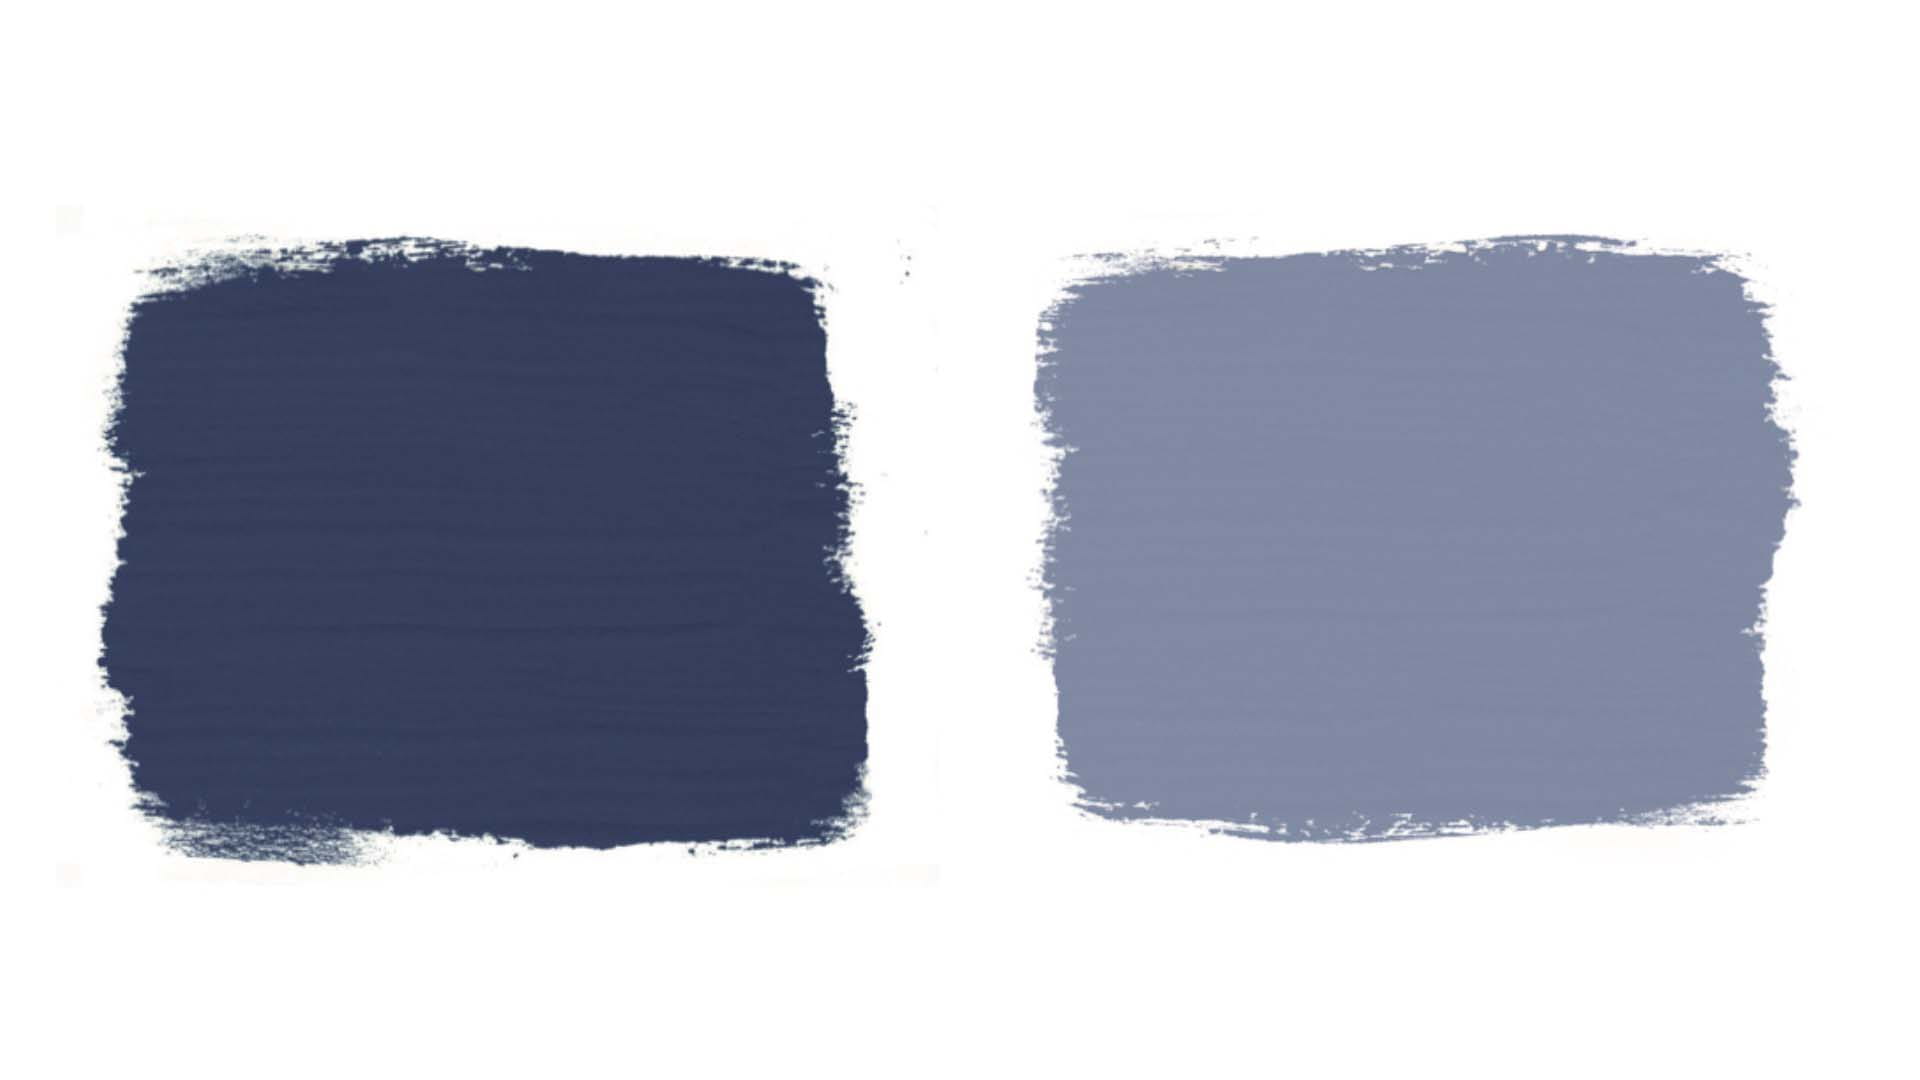 An image comparing two blue Annie Sloan hues